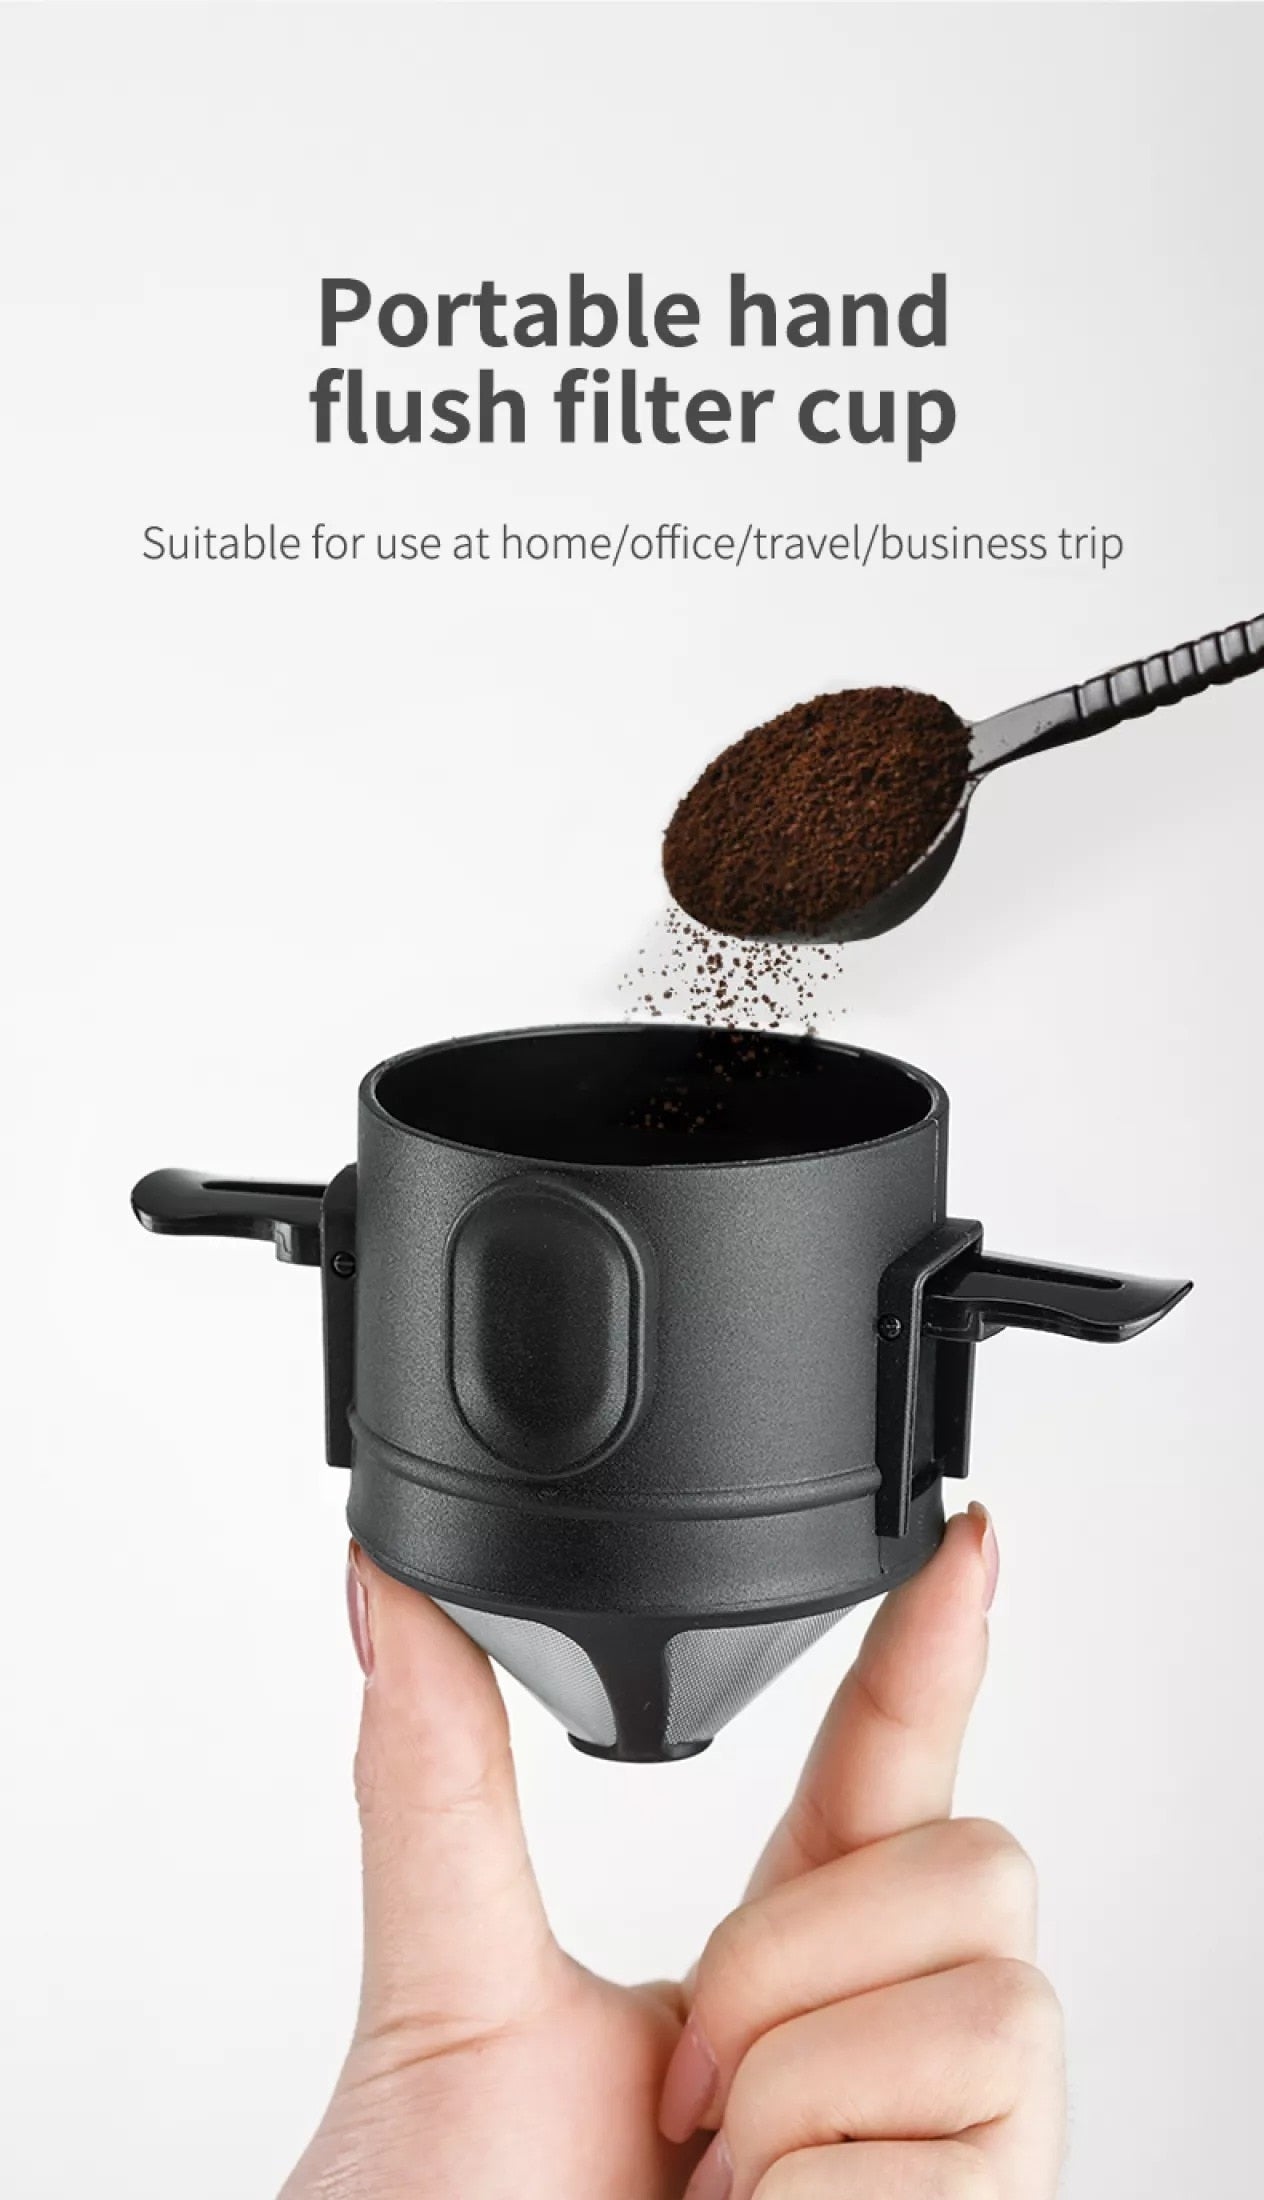 Cafel™ Coffee Drip to Go Set